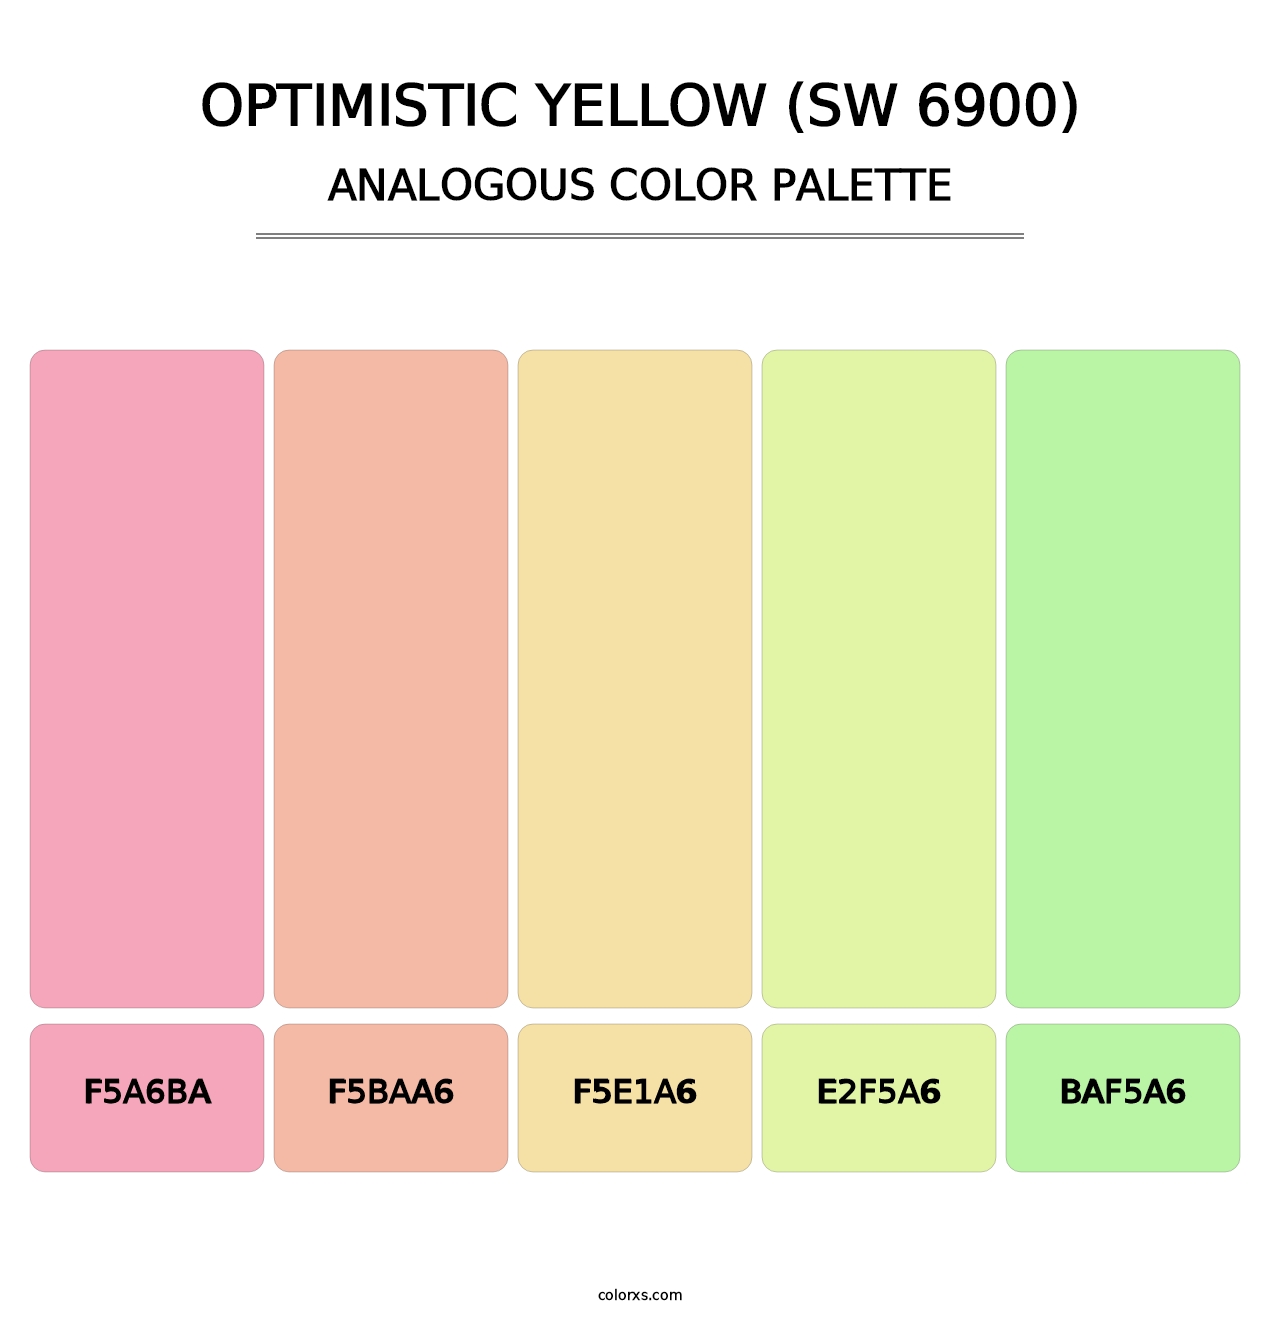 Optimistic Yellow (SW 6900) - Analogous Color Palette